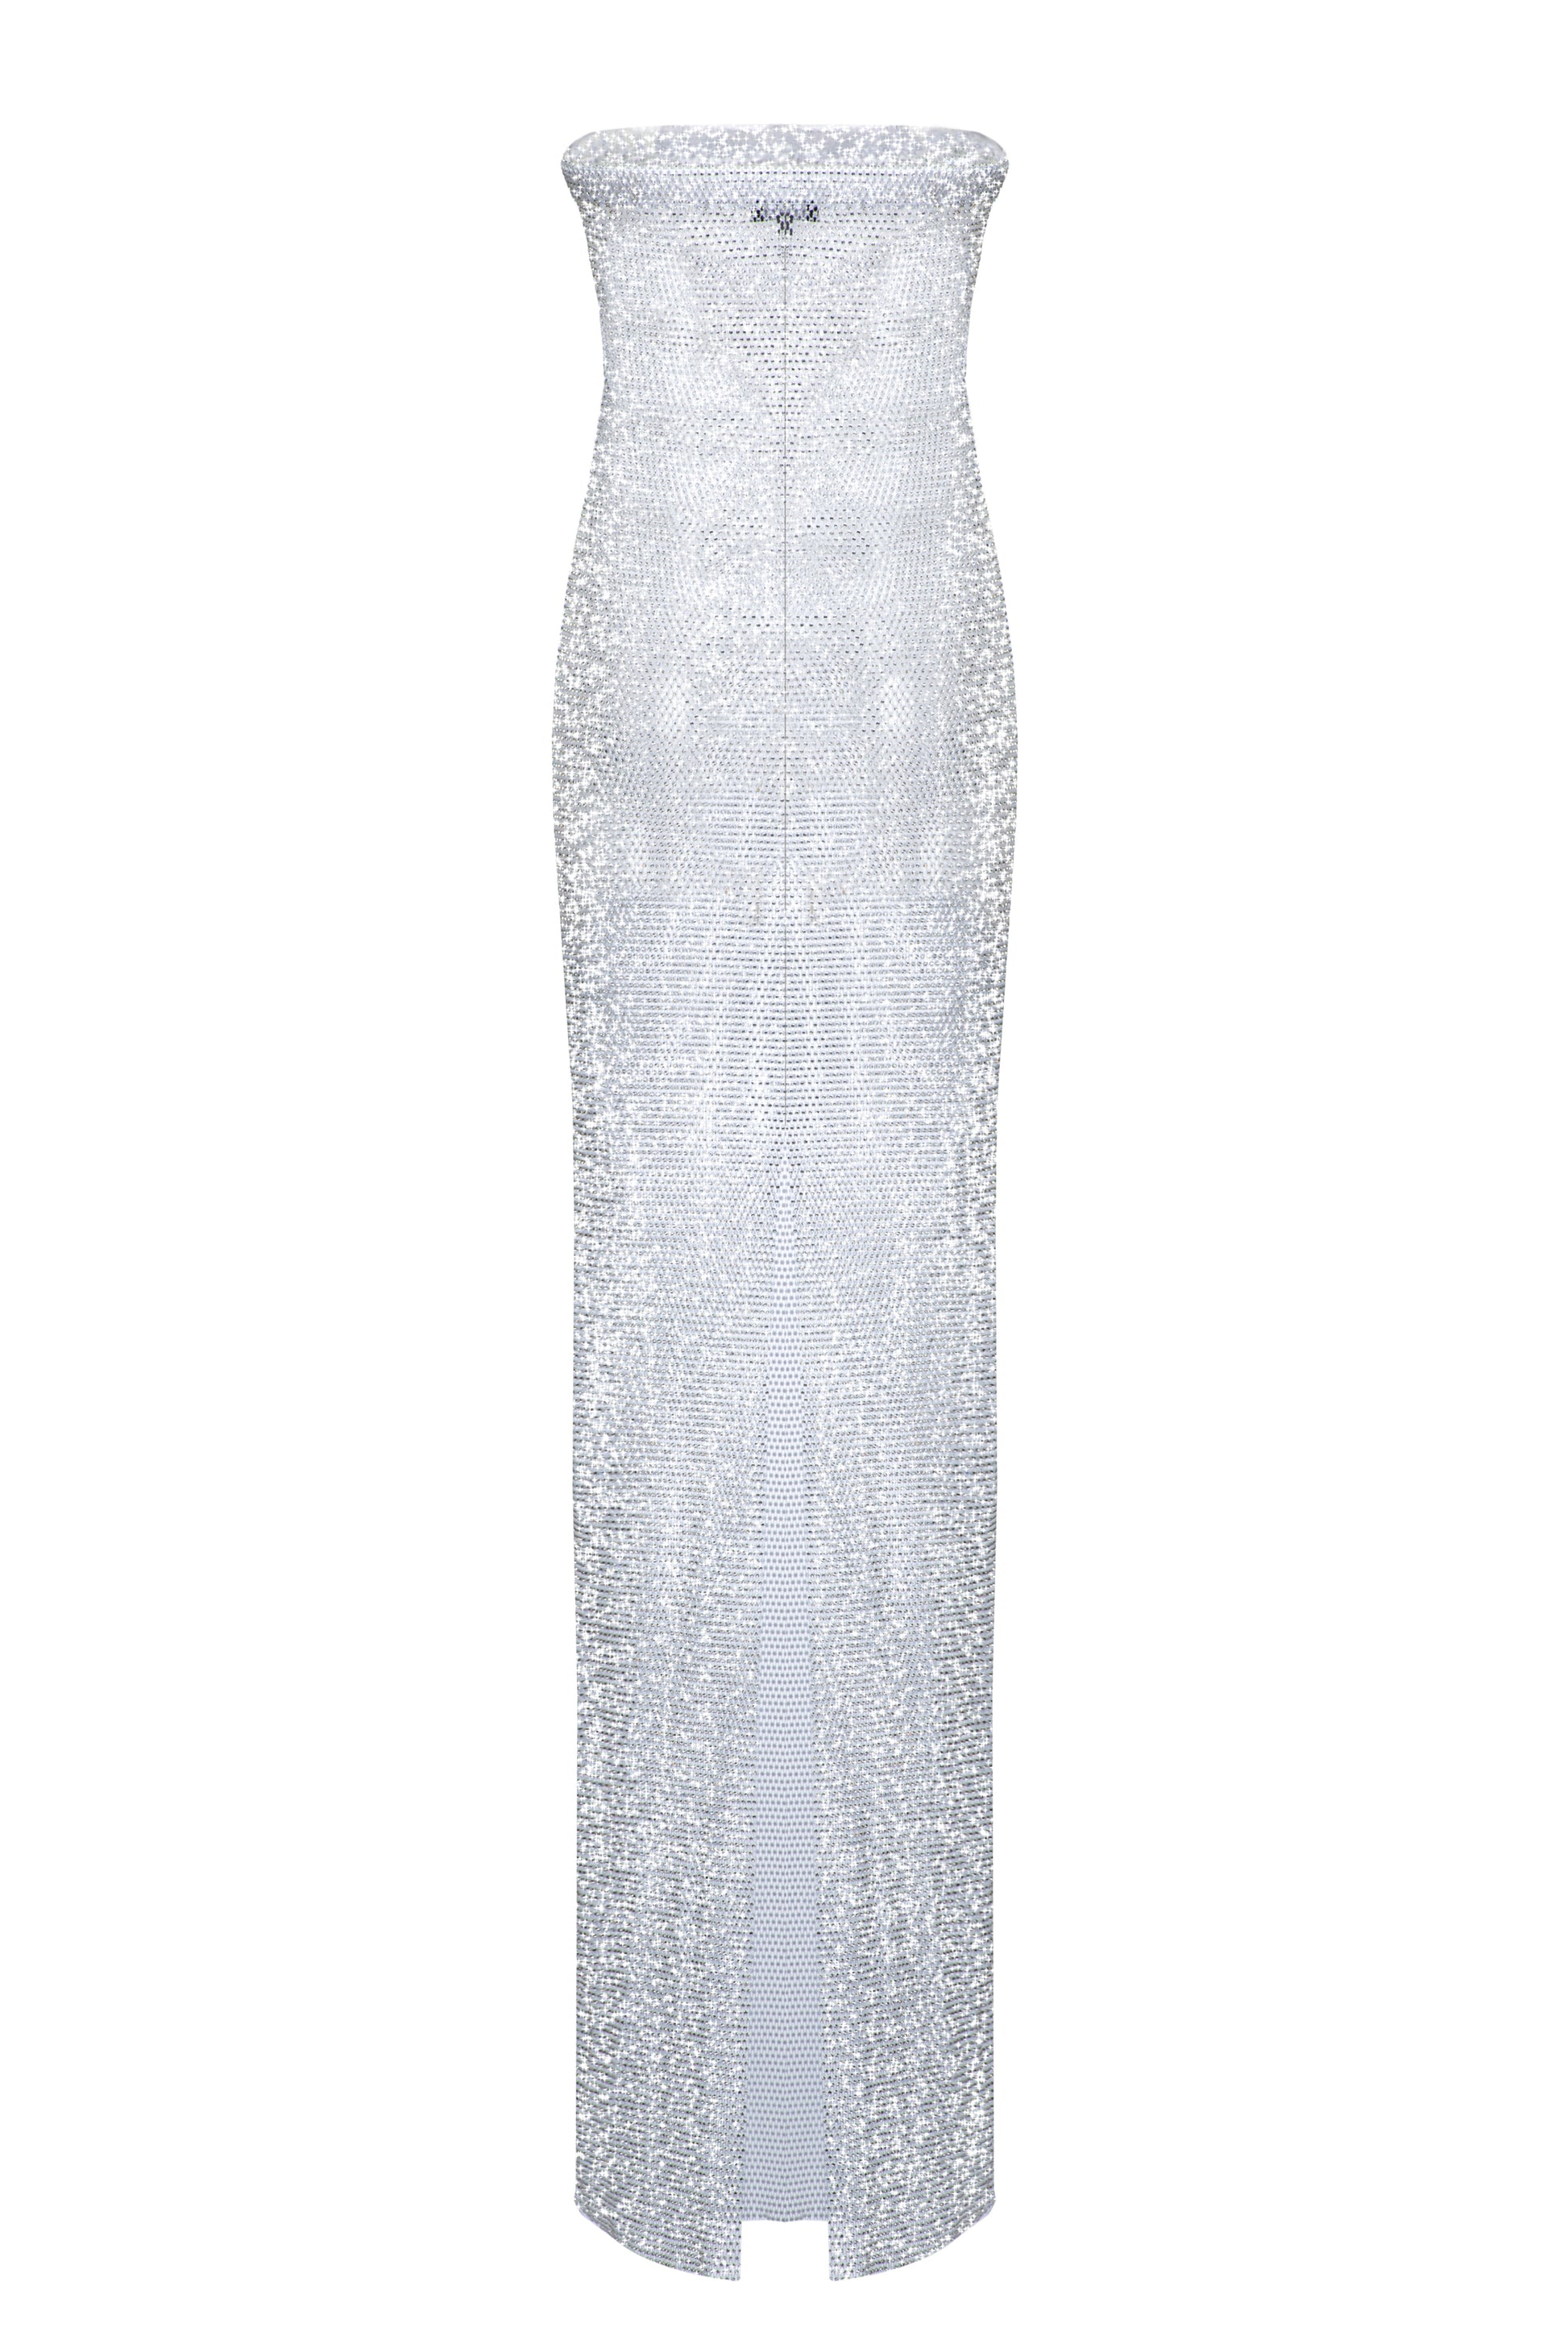 SANTA Sparkle Maxi Dress with Open Shoulders - White back